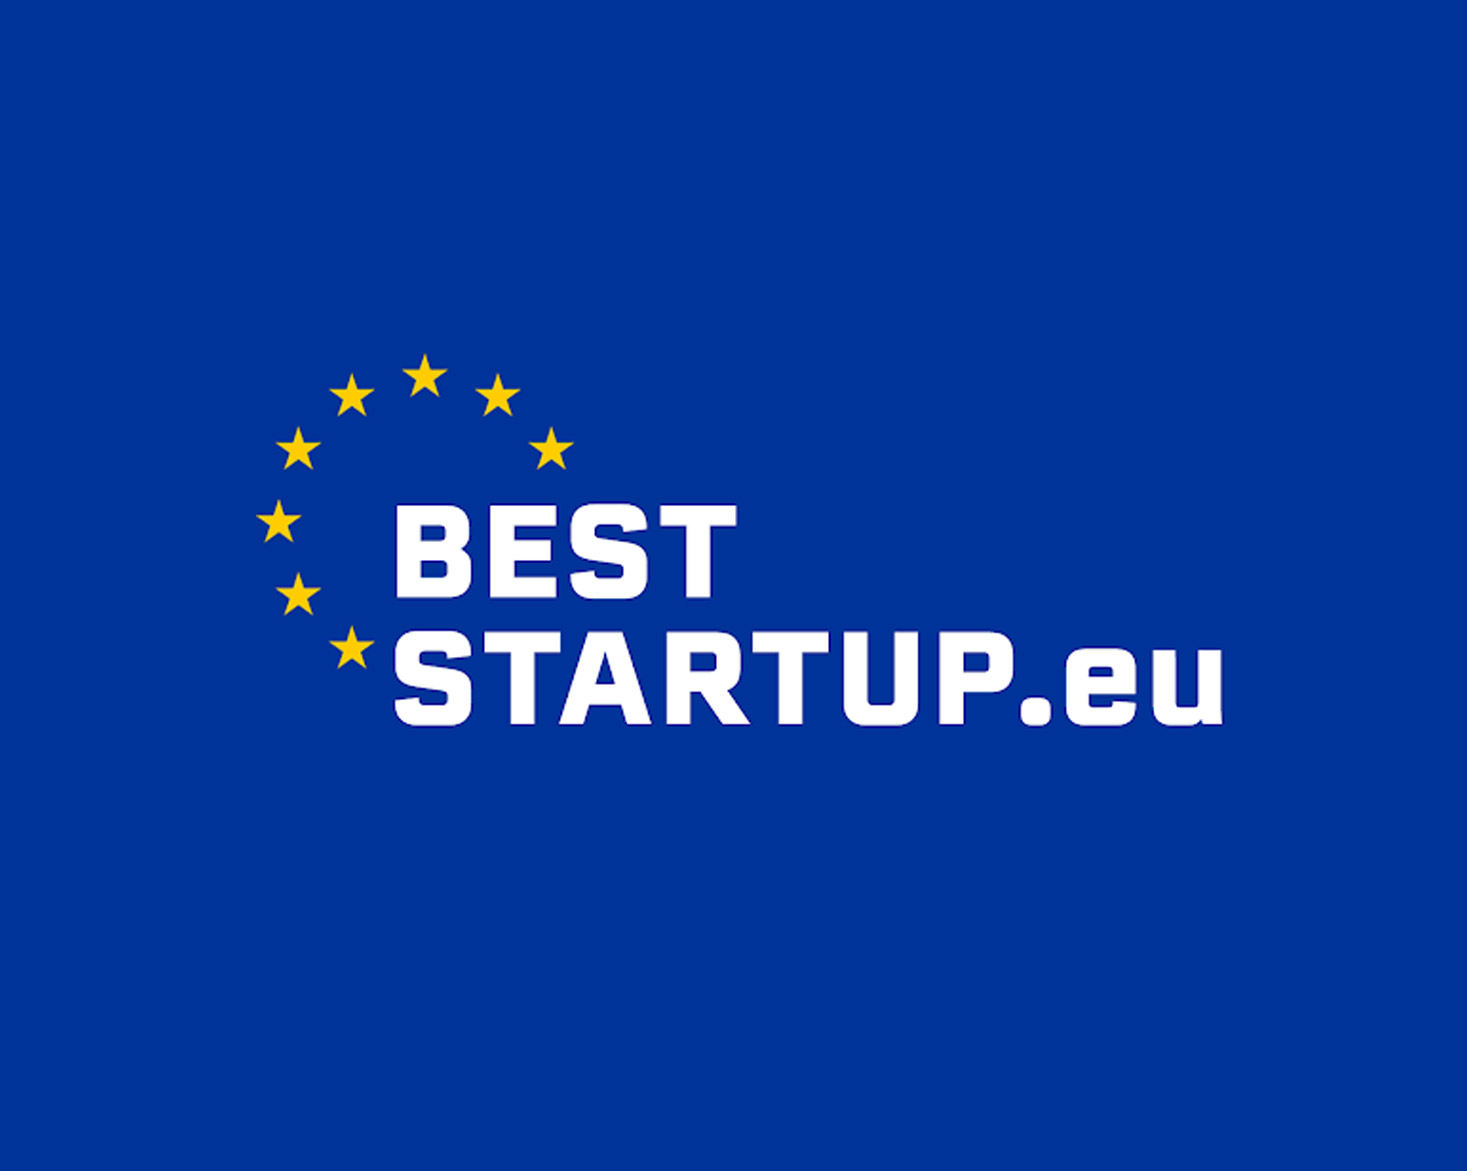 Beststartup.eu logo